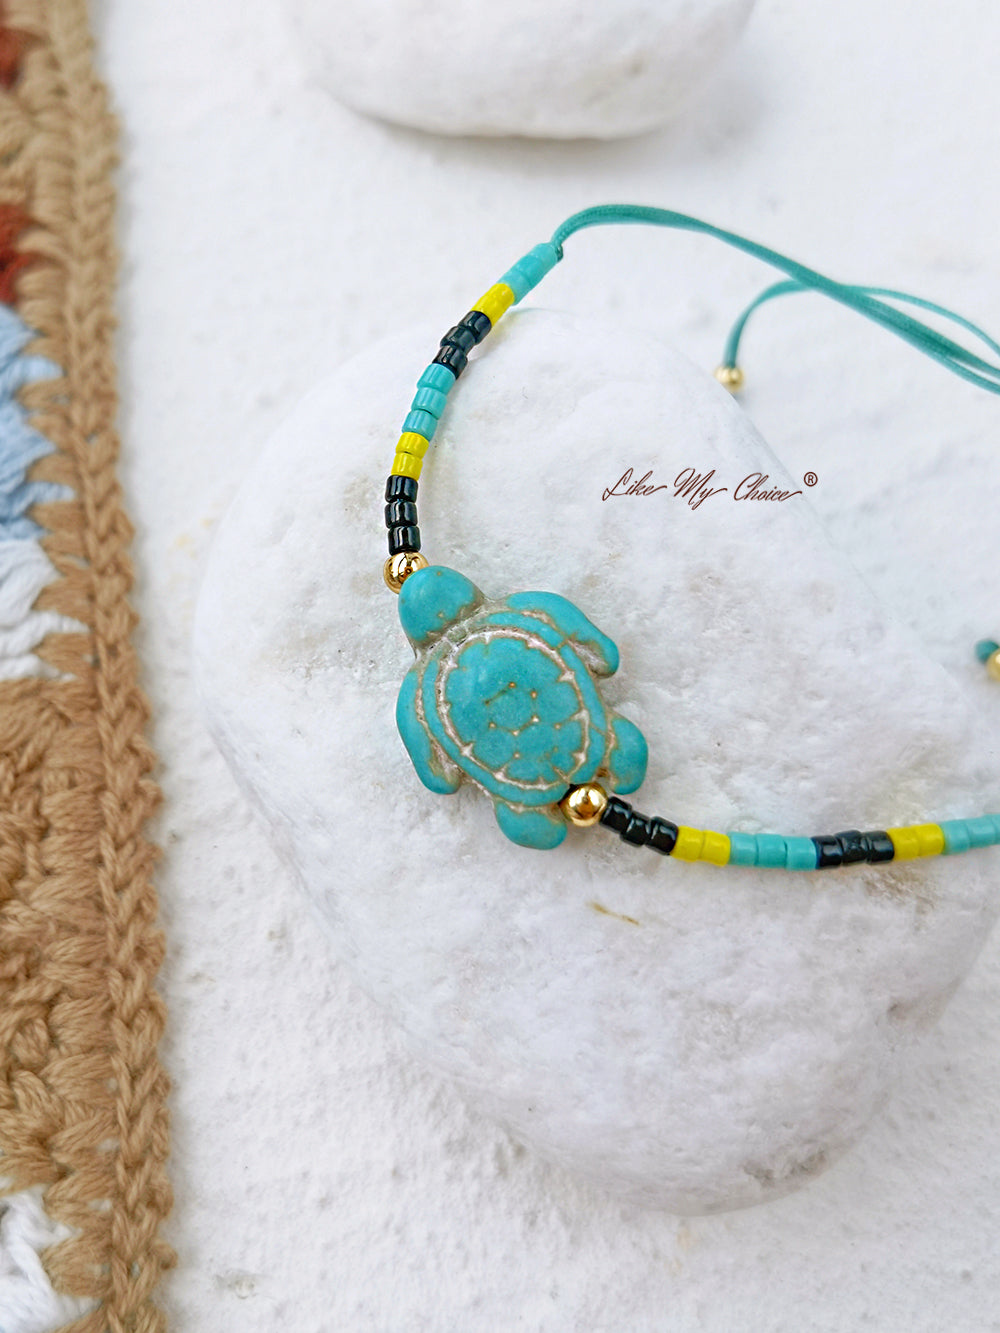 Verstellbares Perlenarmband mit Kordelzug, türkisgrün, blaue Schildkröte